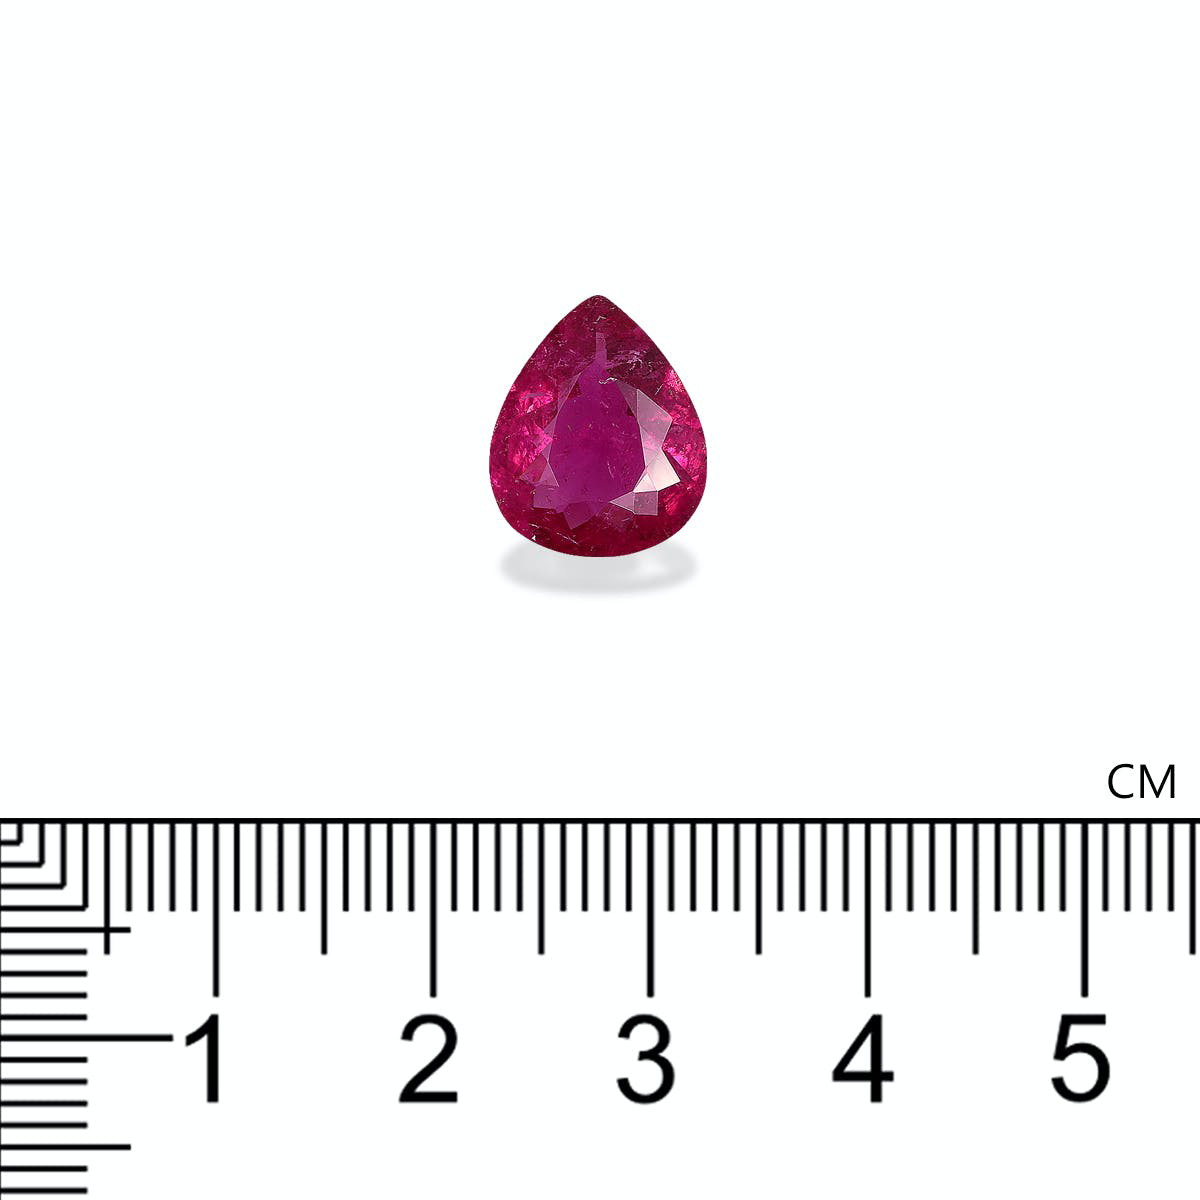 Picture of Vivid Pink Rubellite Tourmaline 3.05ct - 12x10mm (RL0977)